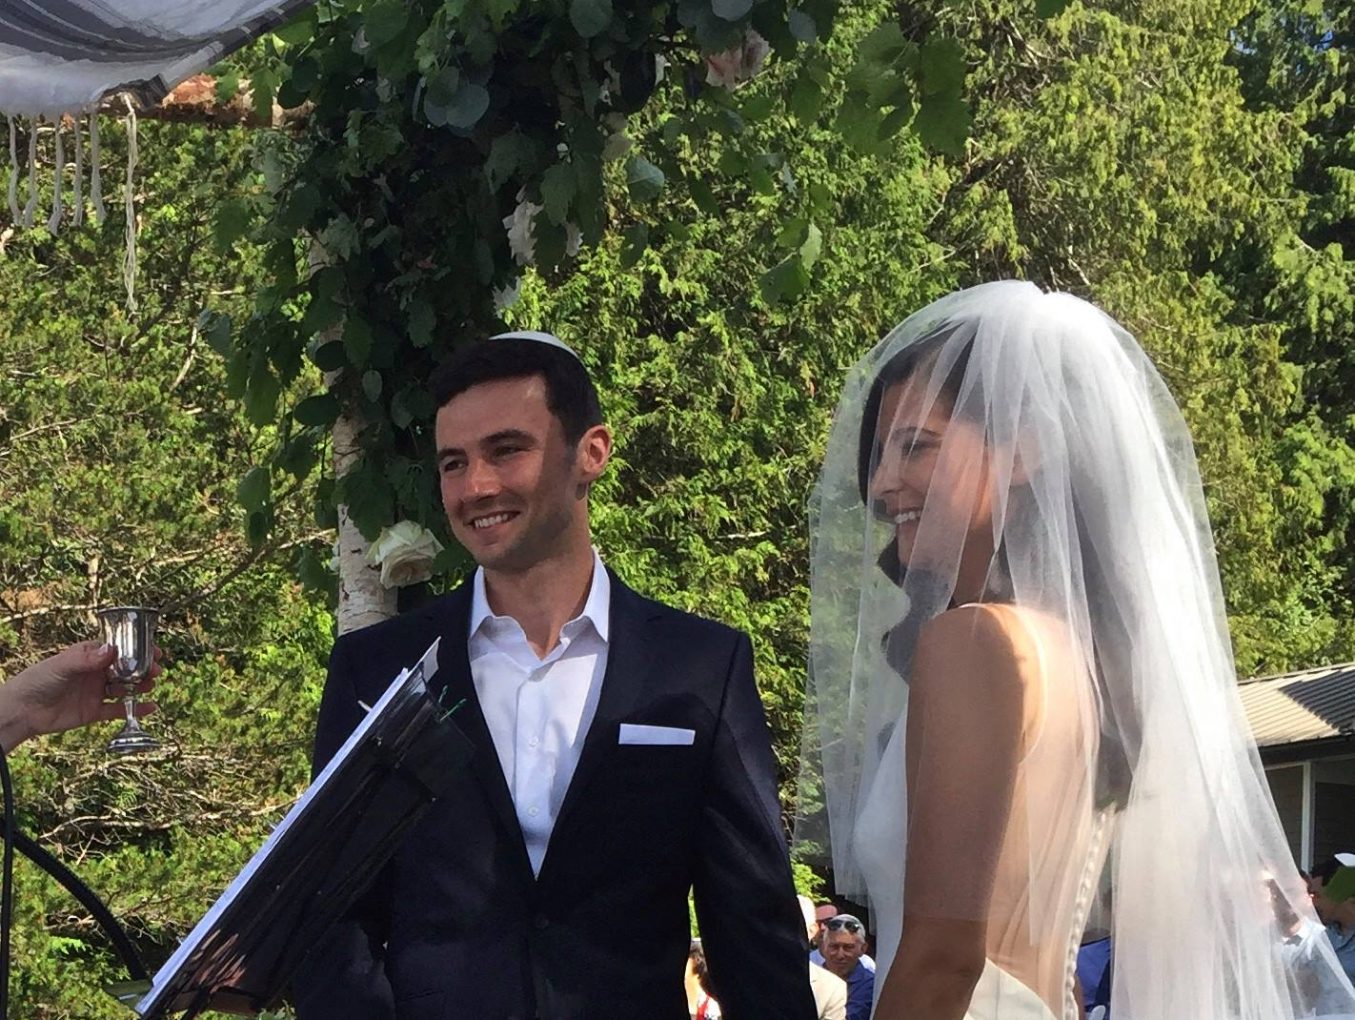 Wedding: Make it Beautiful, Officiants!